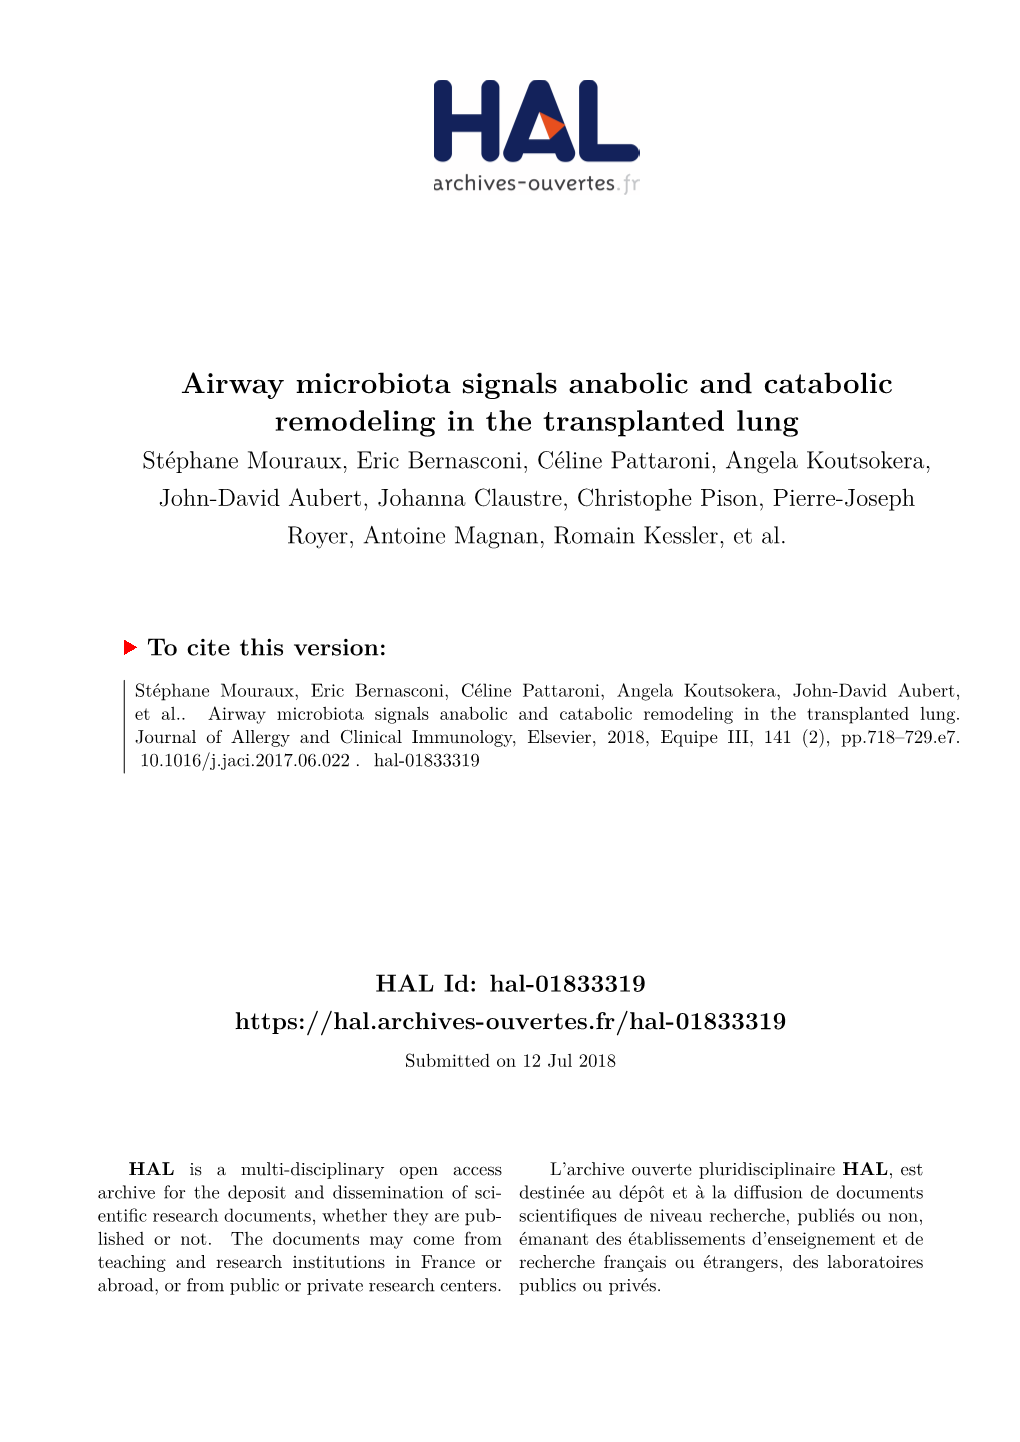 Airway Microbiota Signals Anabolic and Catabolic